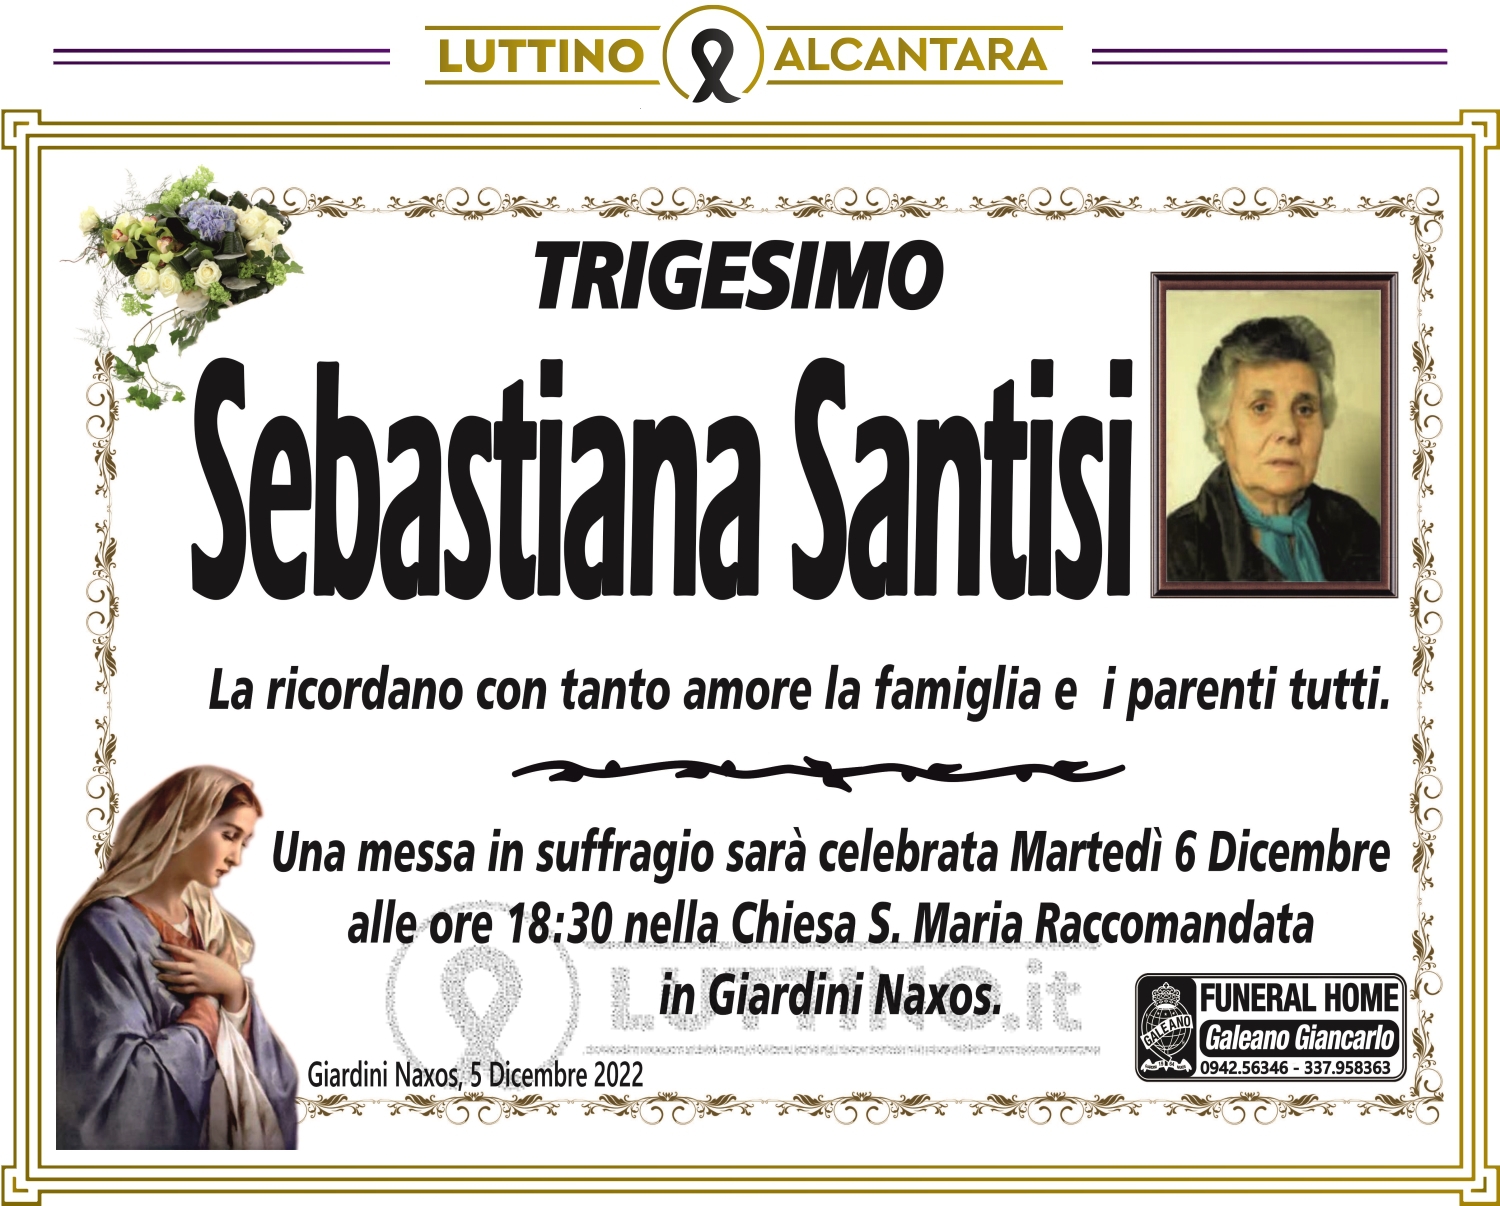 Sebastiana Santisi 